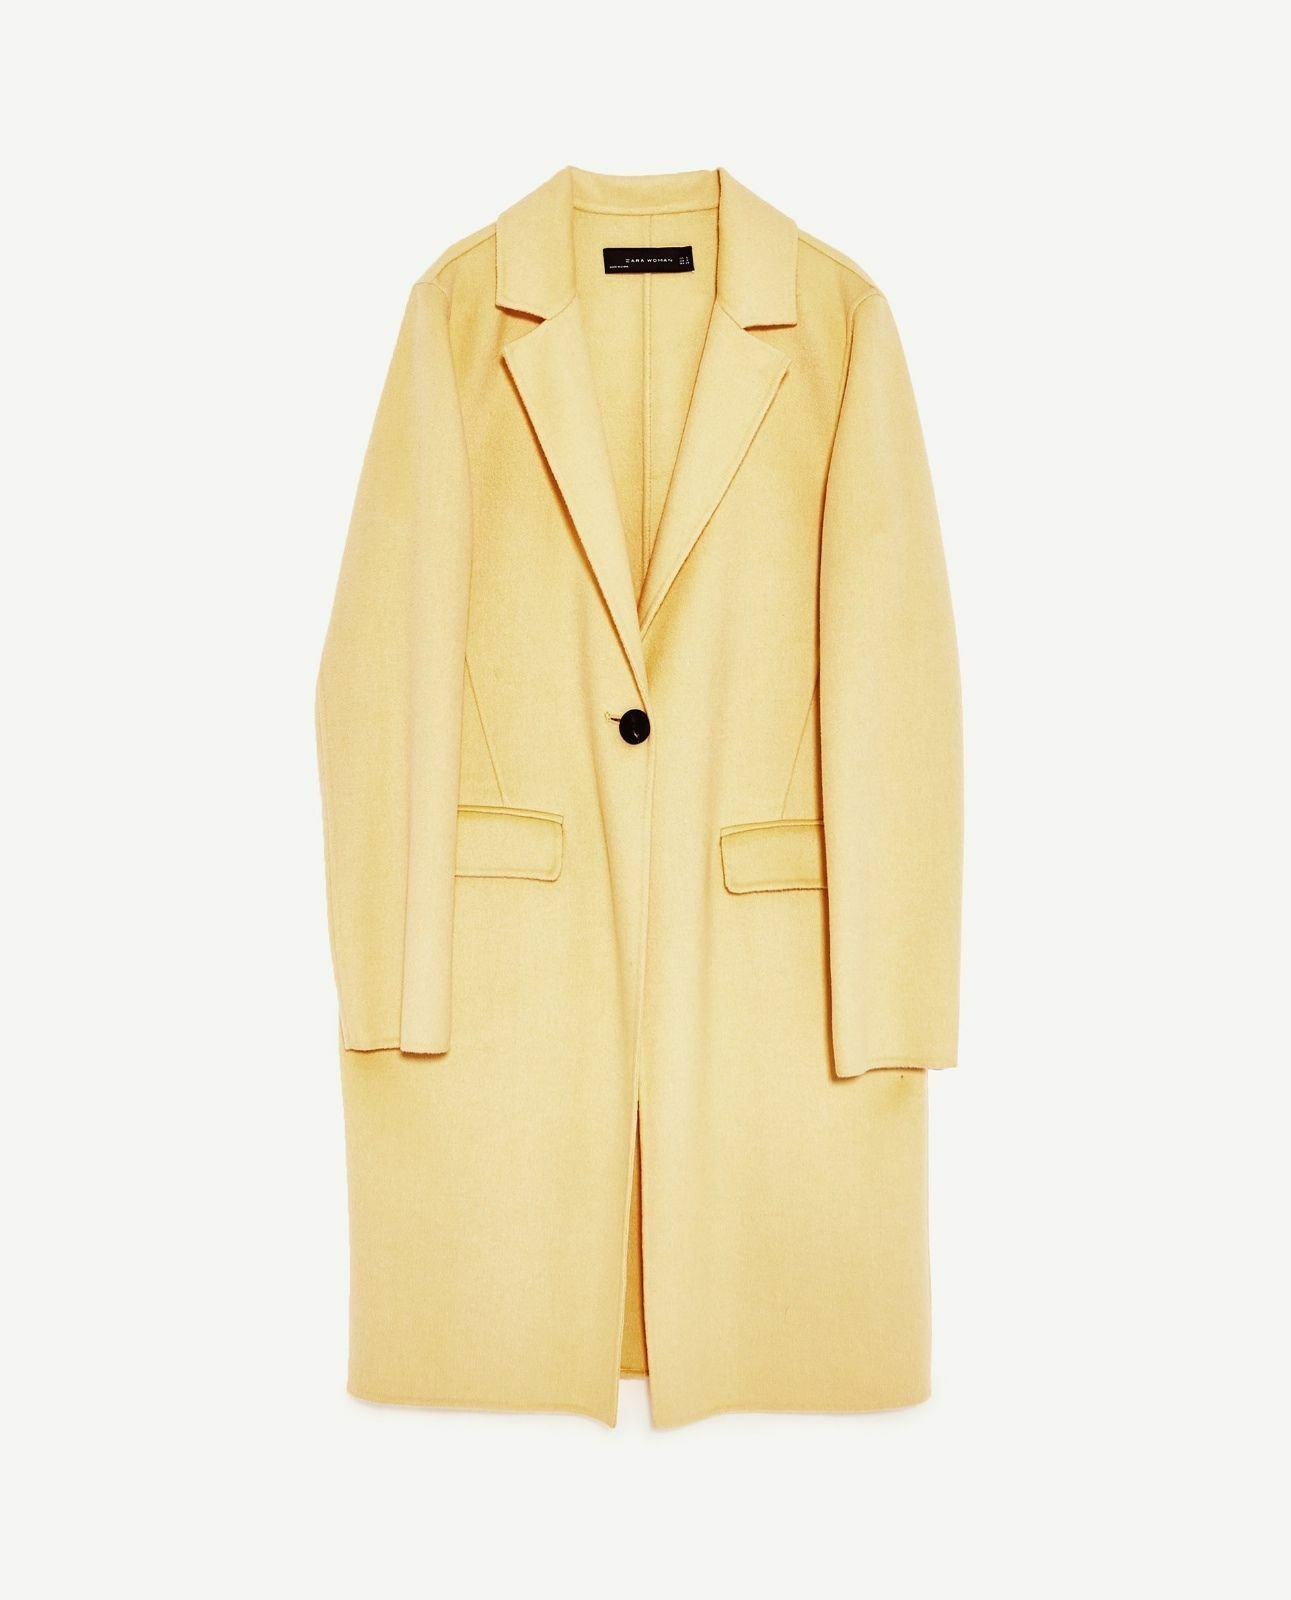 Zara Handmade Wool Blend Long Coat in Yellow.jpg